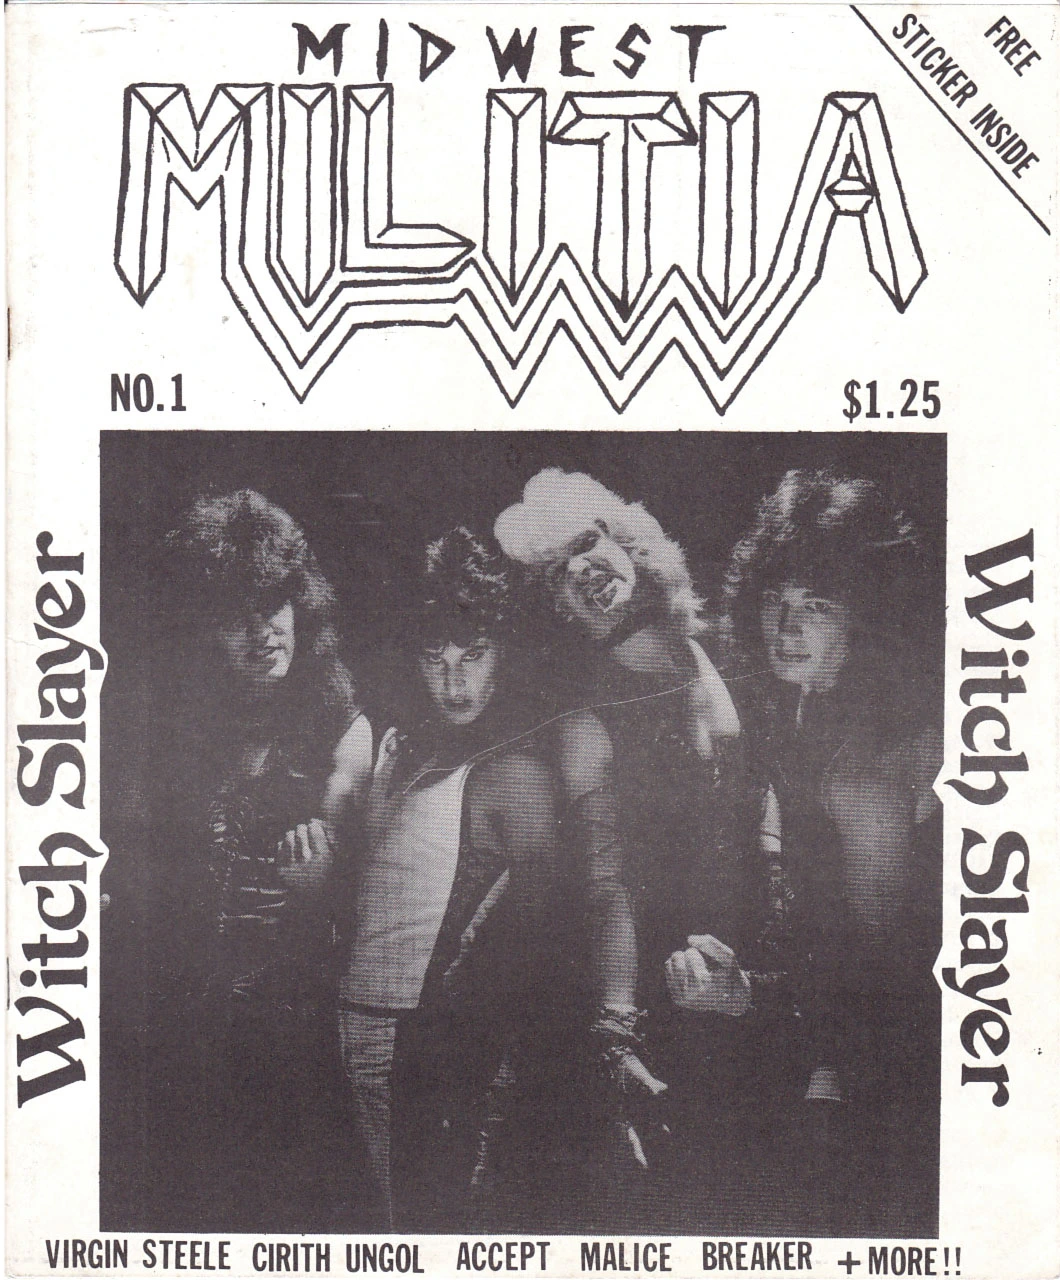 midwest_militia-01-01 Midwest Militia No 1  